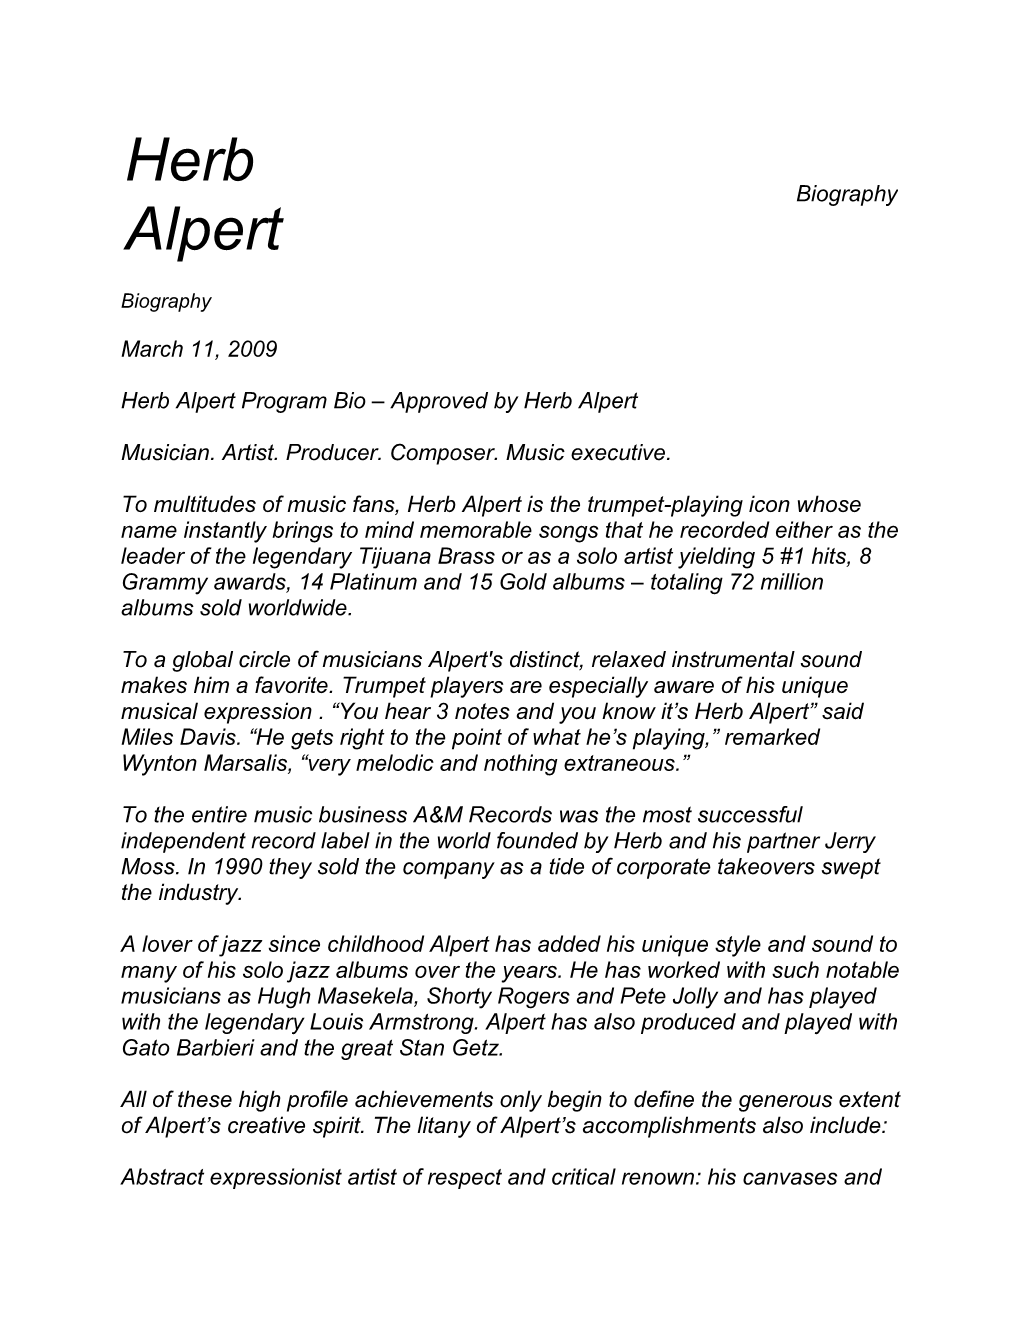 Herb Alpert Program Bio – Approved by Herb Alpert